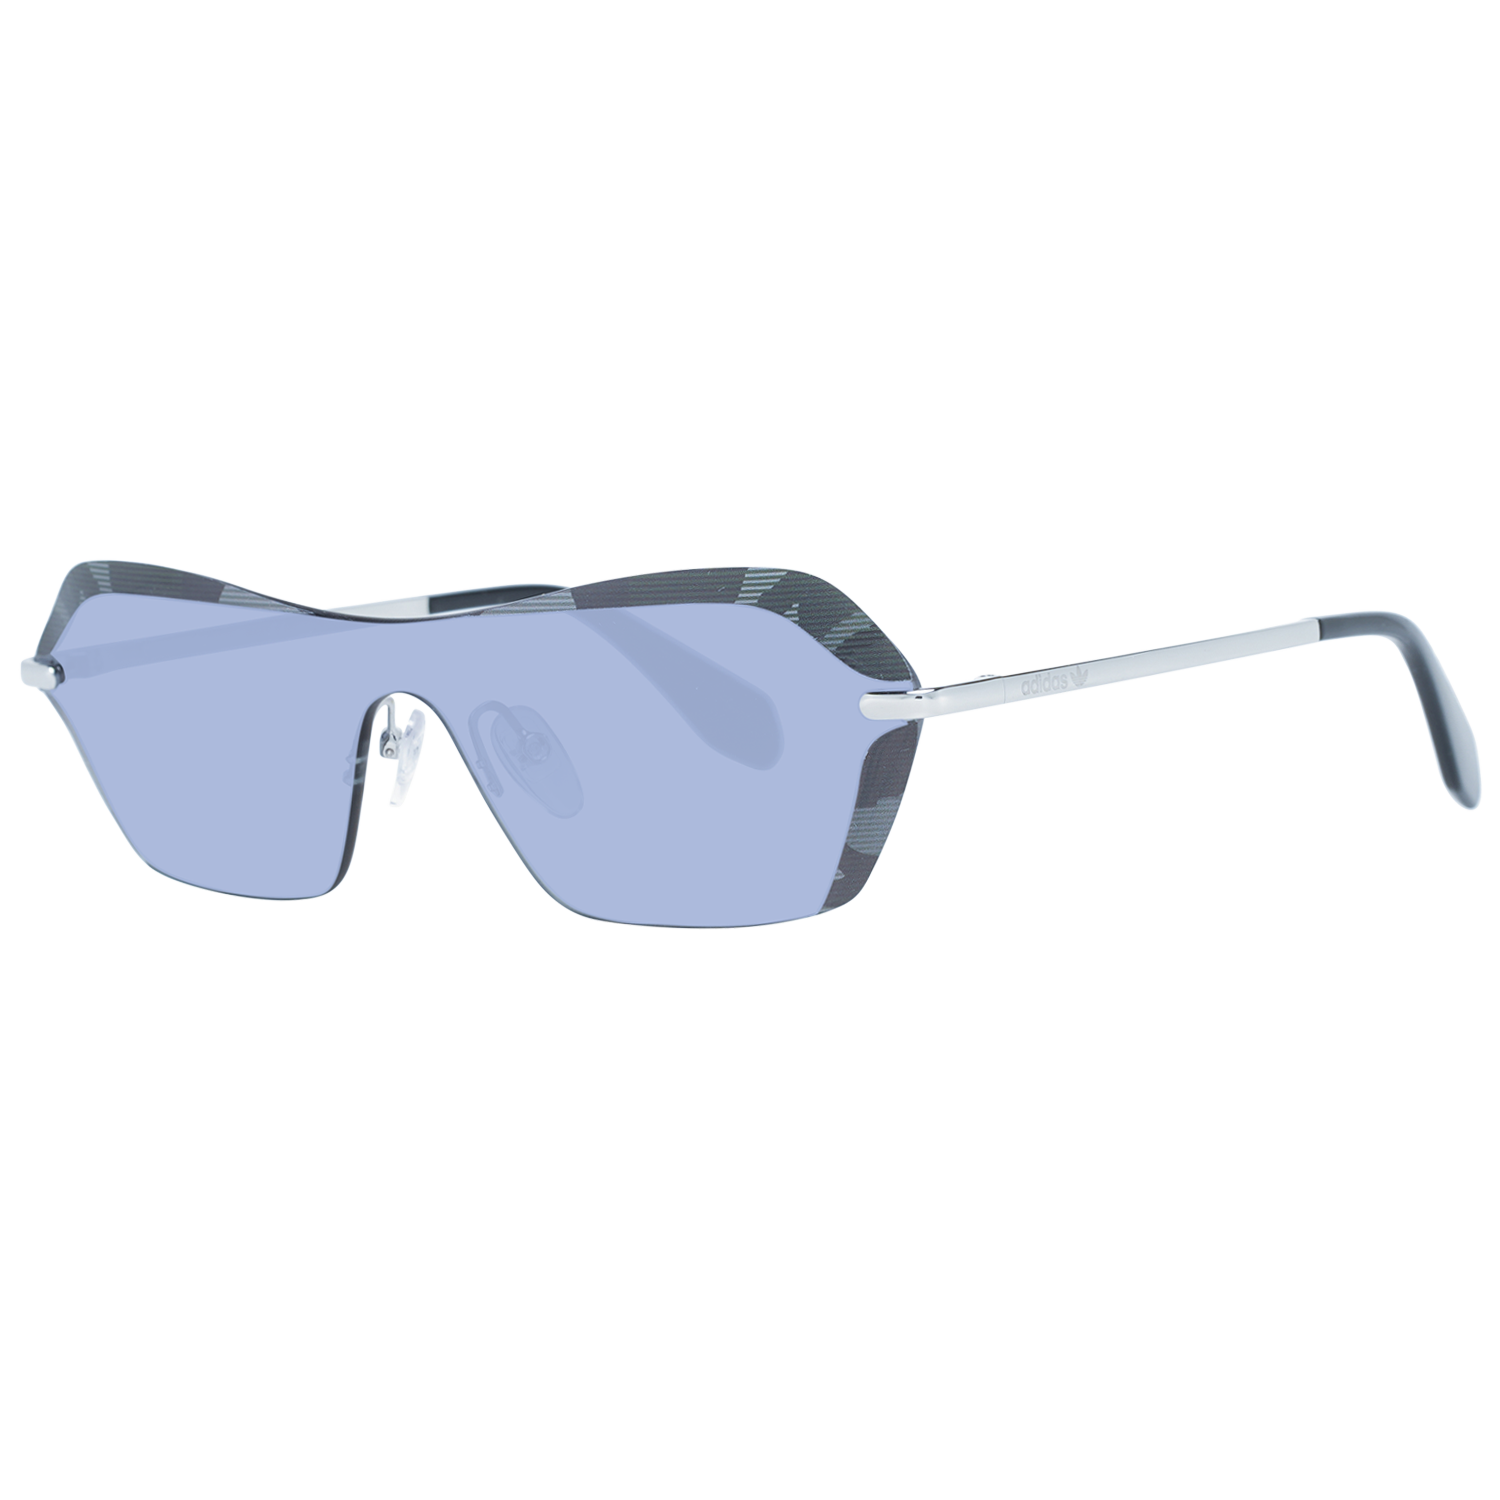 Adidas Sunglasses Adidas Sunglasses OR0015 02B 00 Eyeglasses Eyewear UK USA Australia 